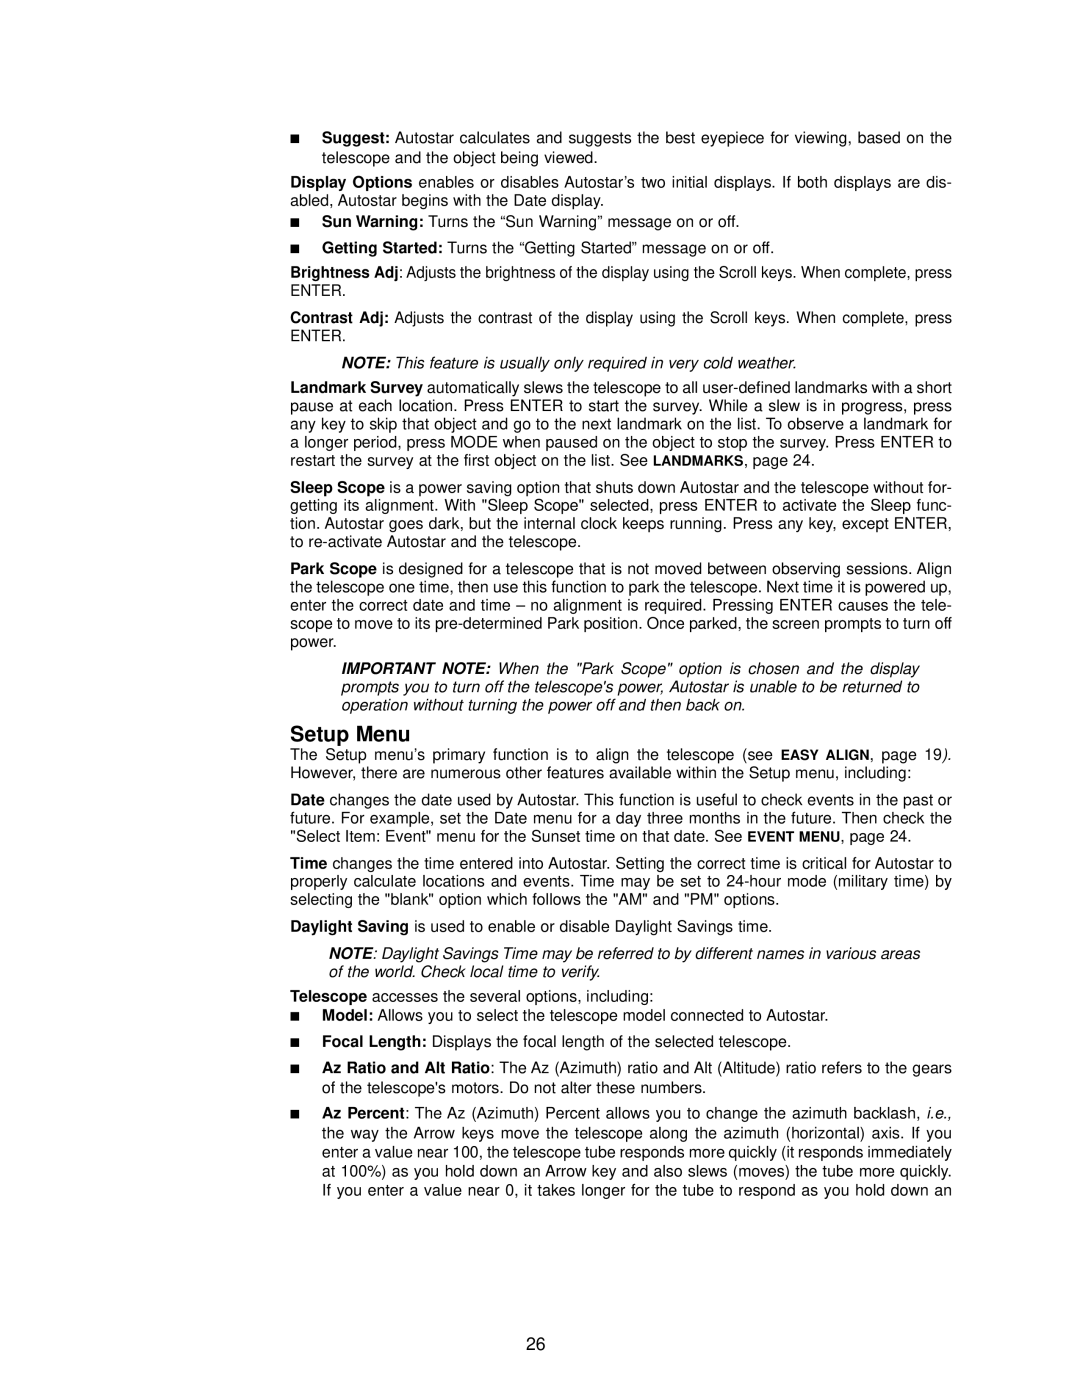 Meade DS-2000 instruction manual Setup Menu 